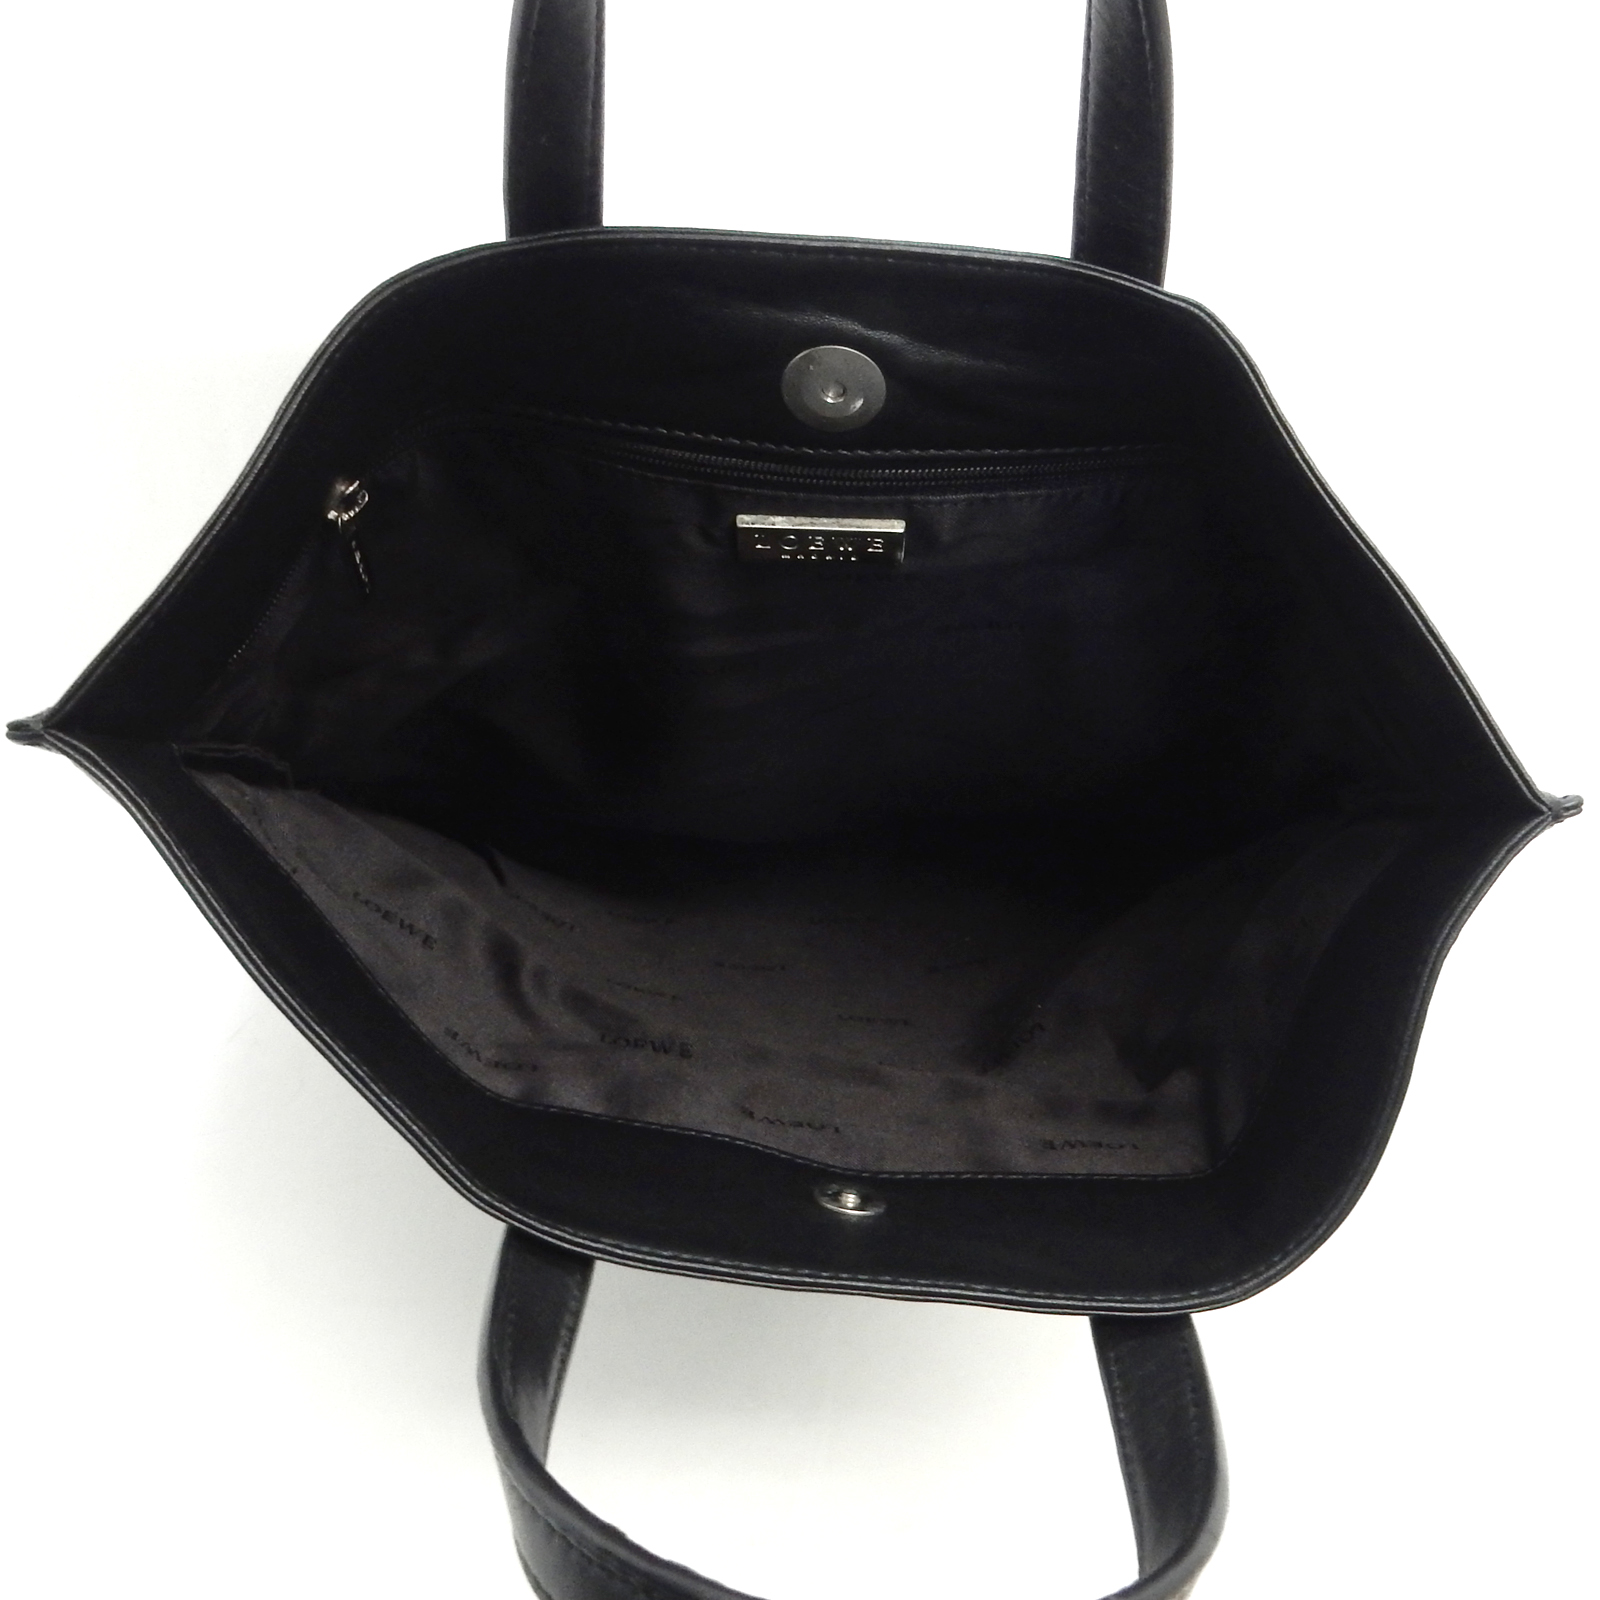 Rise-on LOEWE Black Leather Tote Bag Handbag #4 | eBay